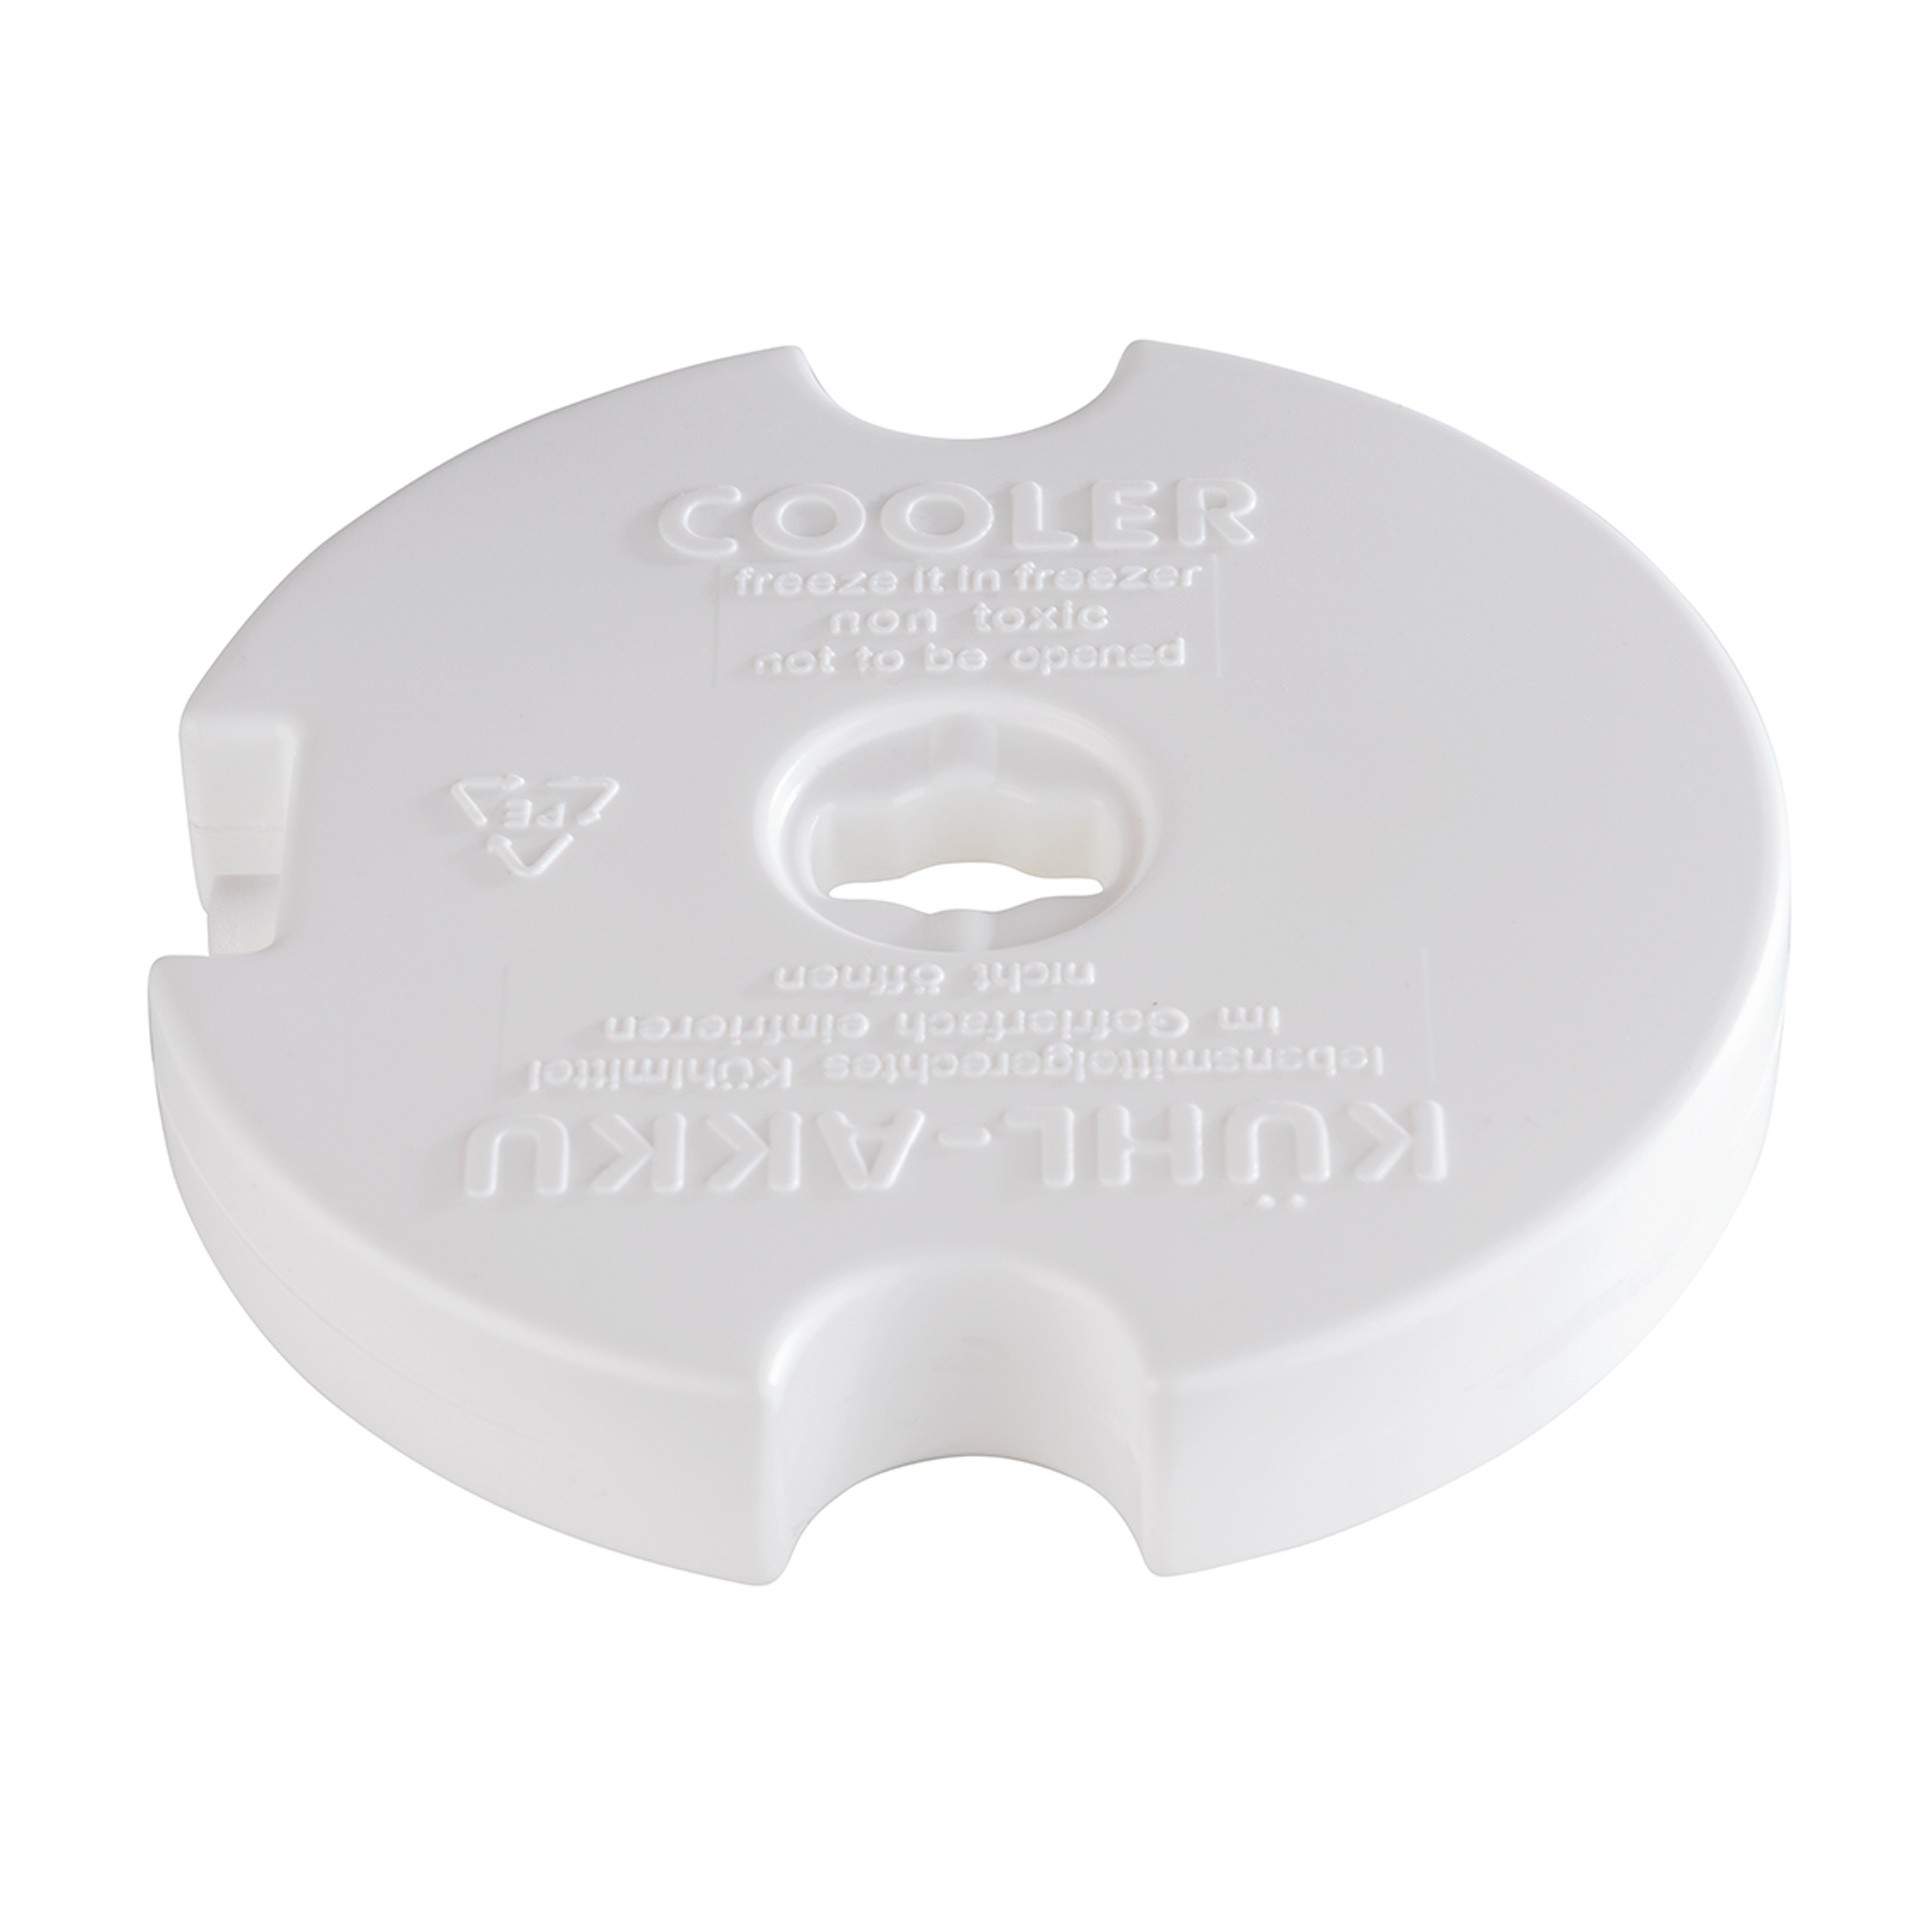 Kühlakku - gefüllt mit Kühlflüssigkeit - weiß - Abm. 2,5 cm - Ø 15,0 cm - Kunststoff - 10777-B